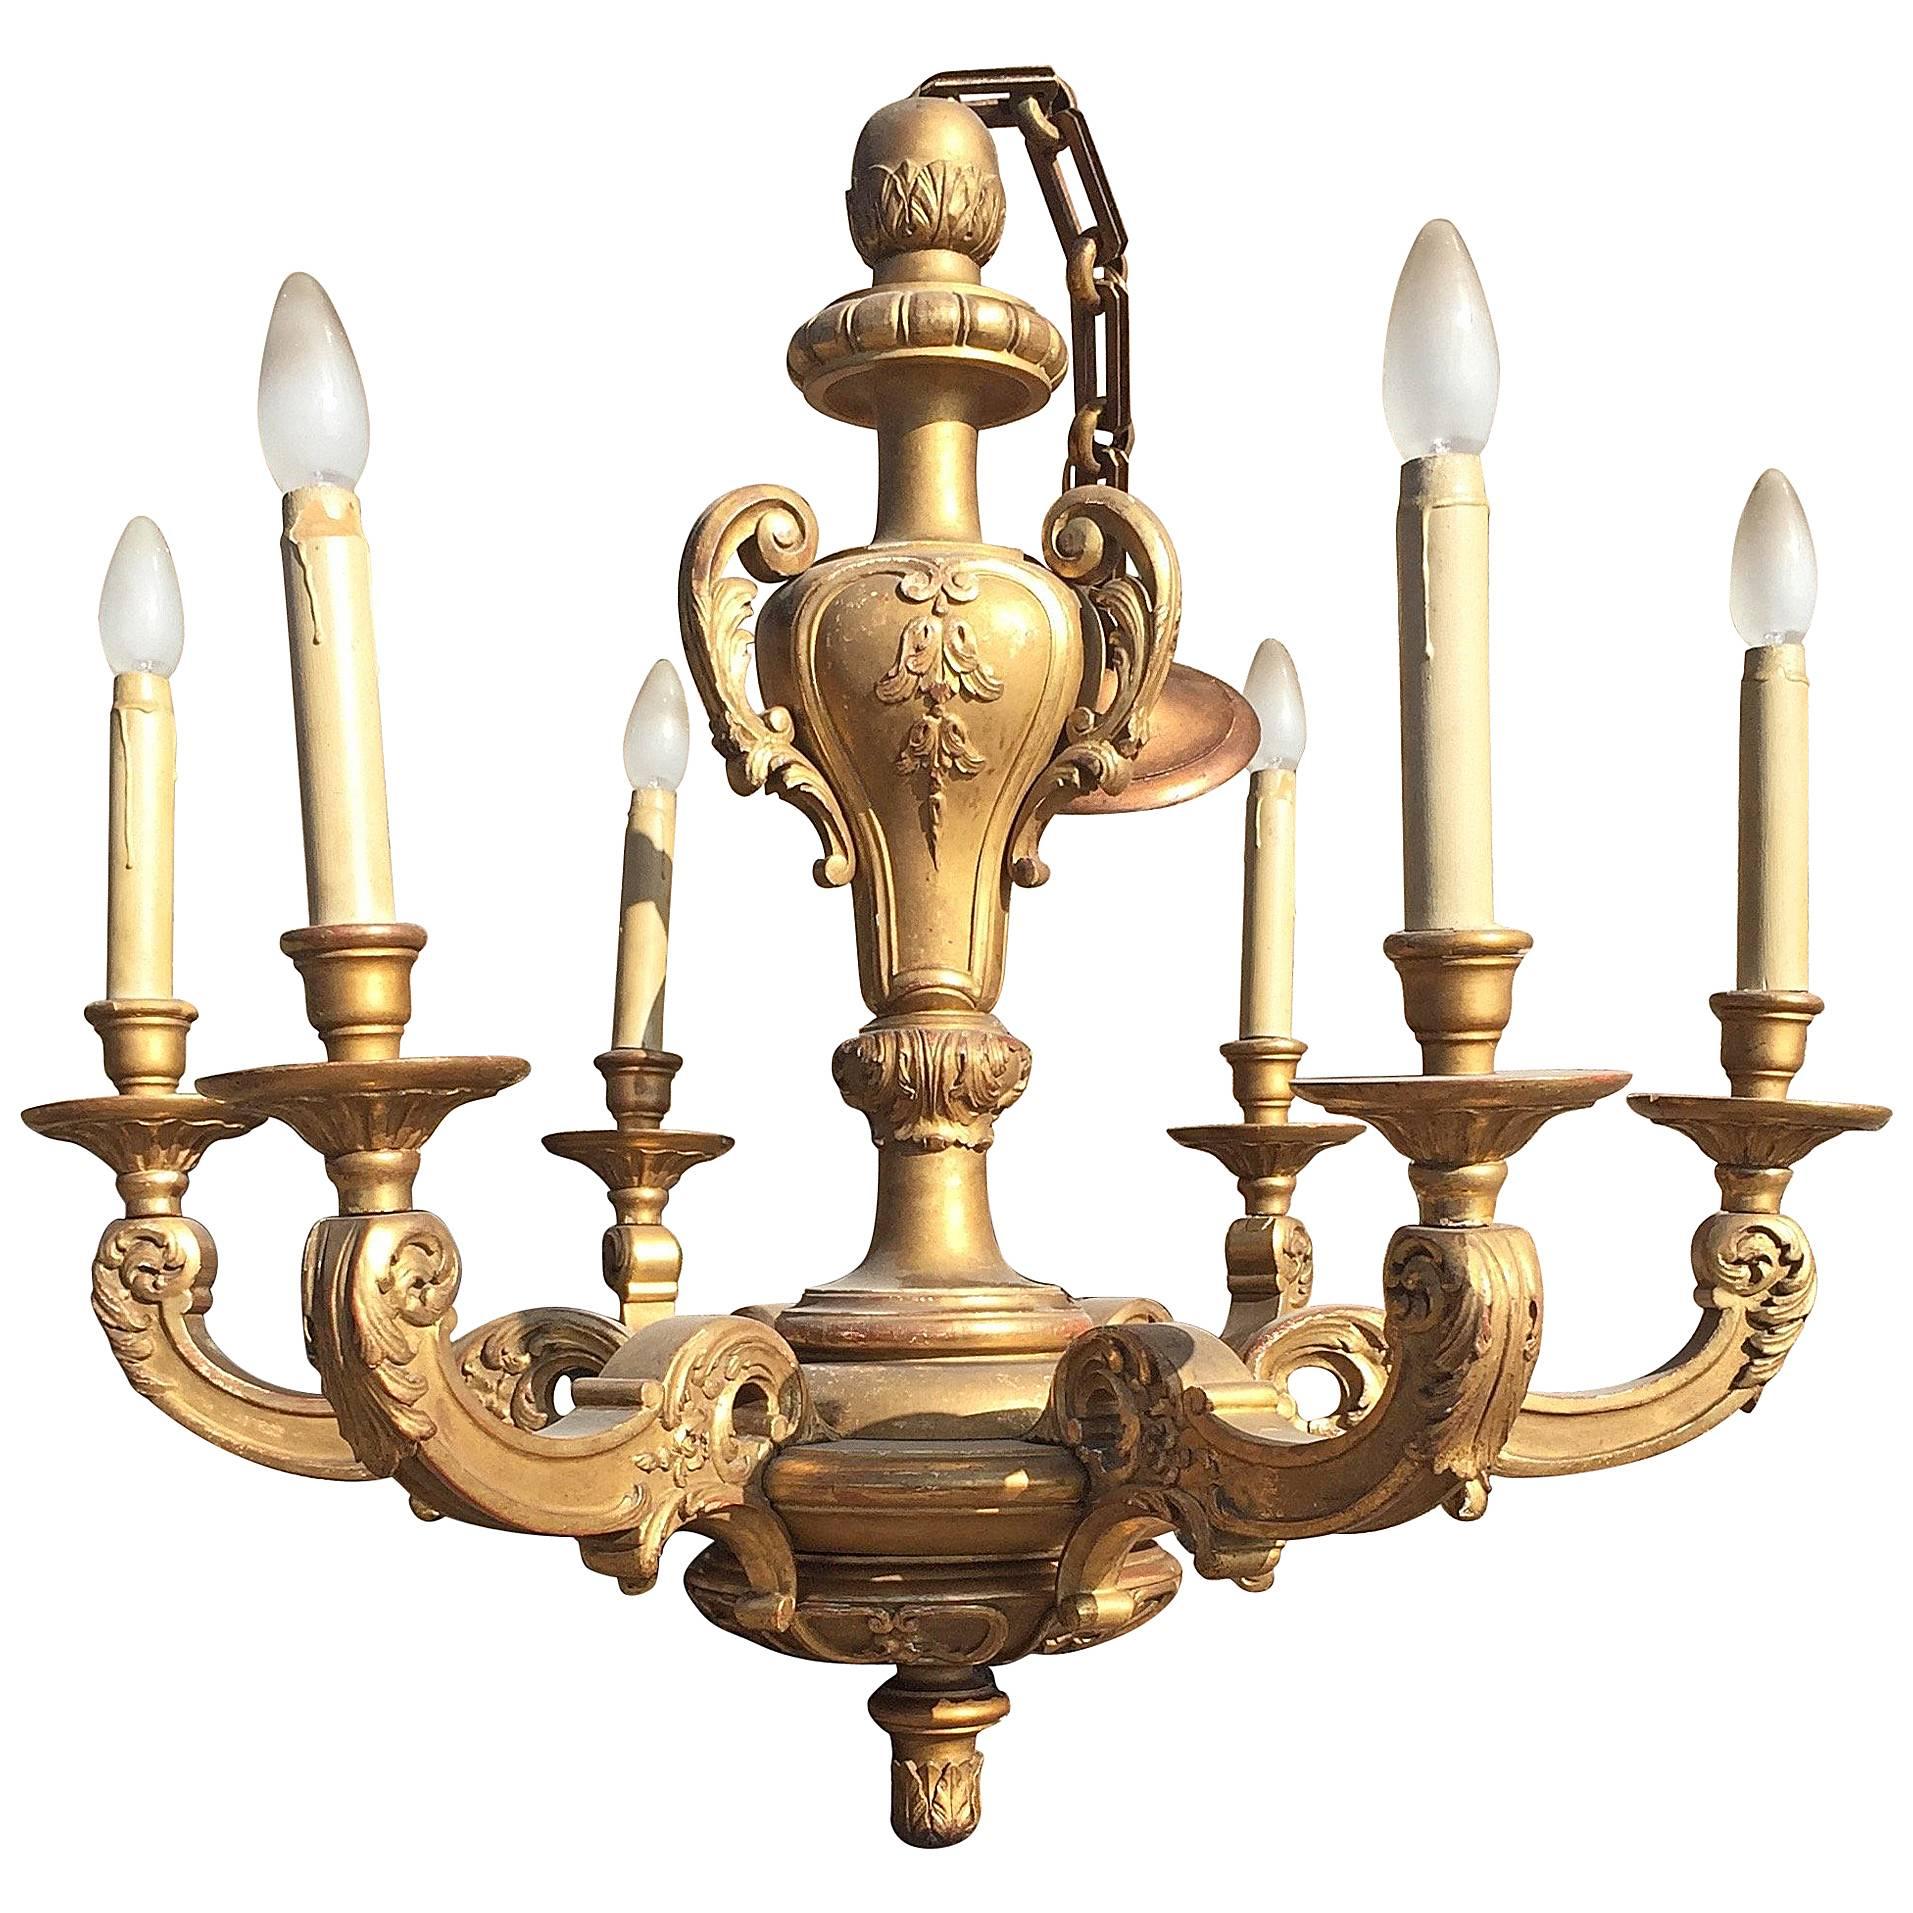 Early 1900s Art Nouveau Era Fine Quality Carved Gilt Chandelier Light Fixture For Sale